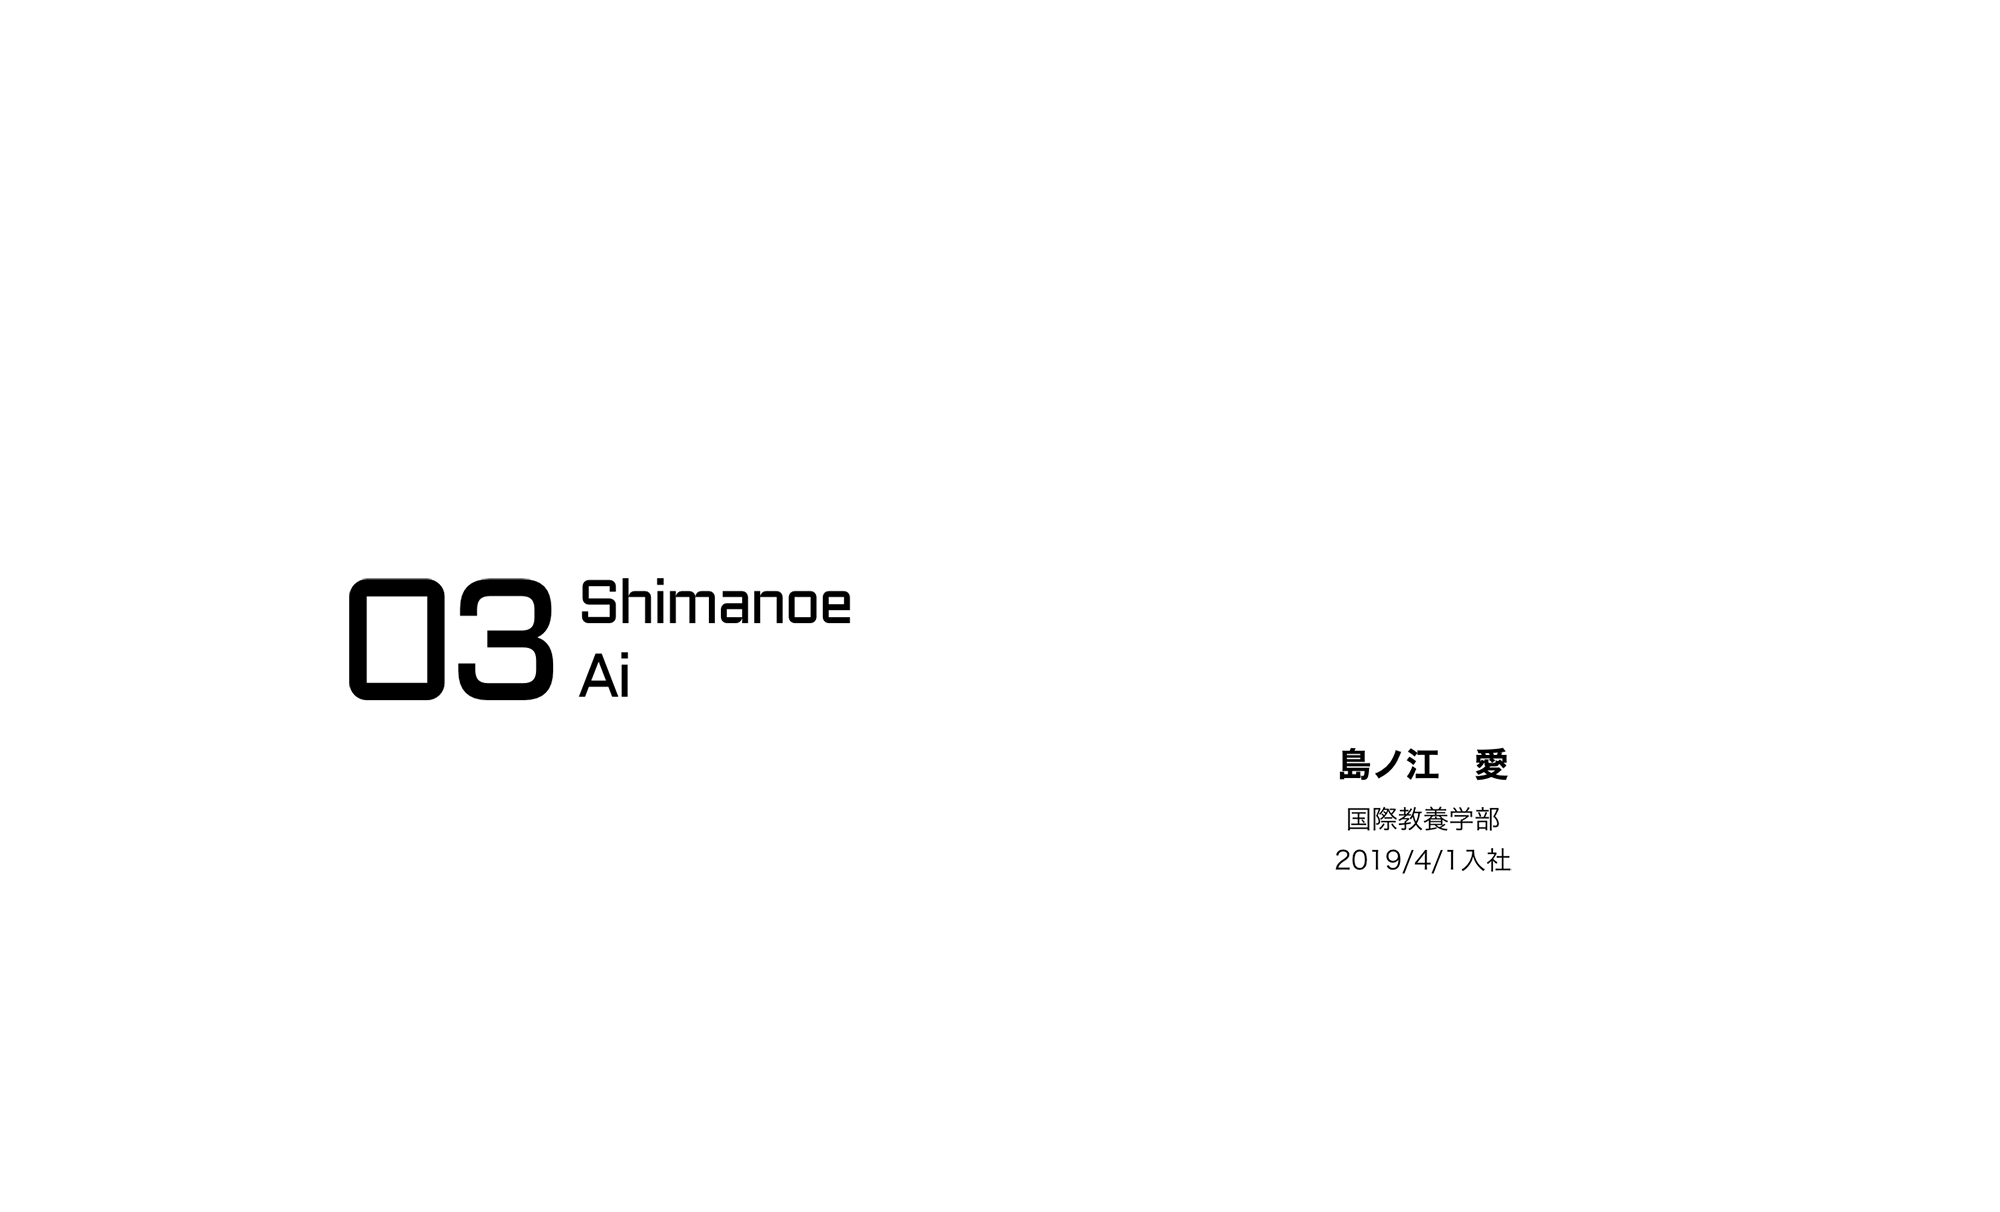 03 Shimanoe Ai / 島ノ江　愛 / 国際教養学部 / 2019/4/1入社